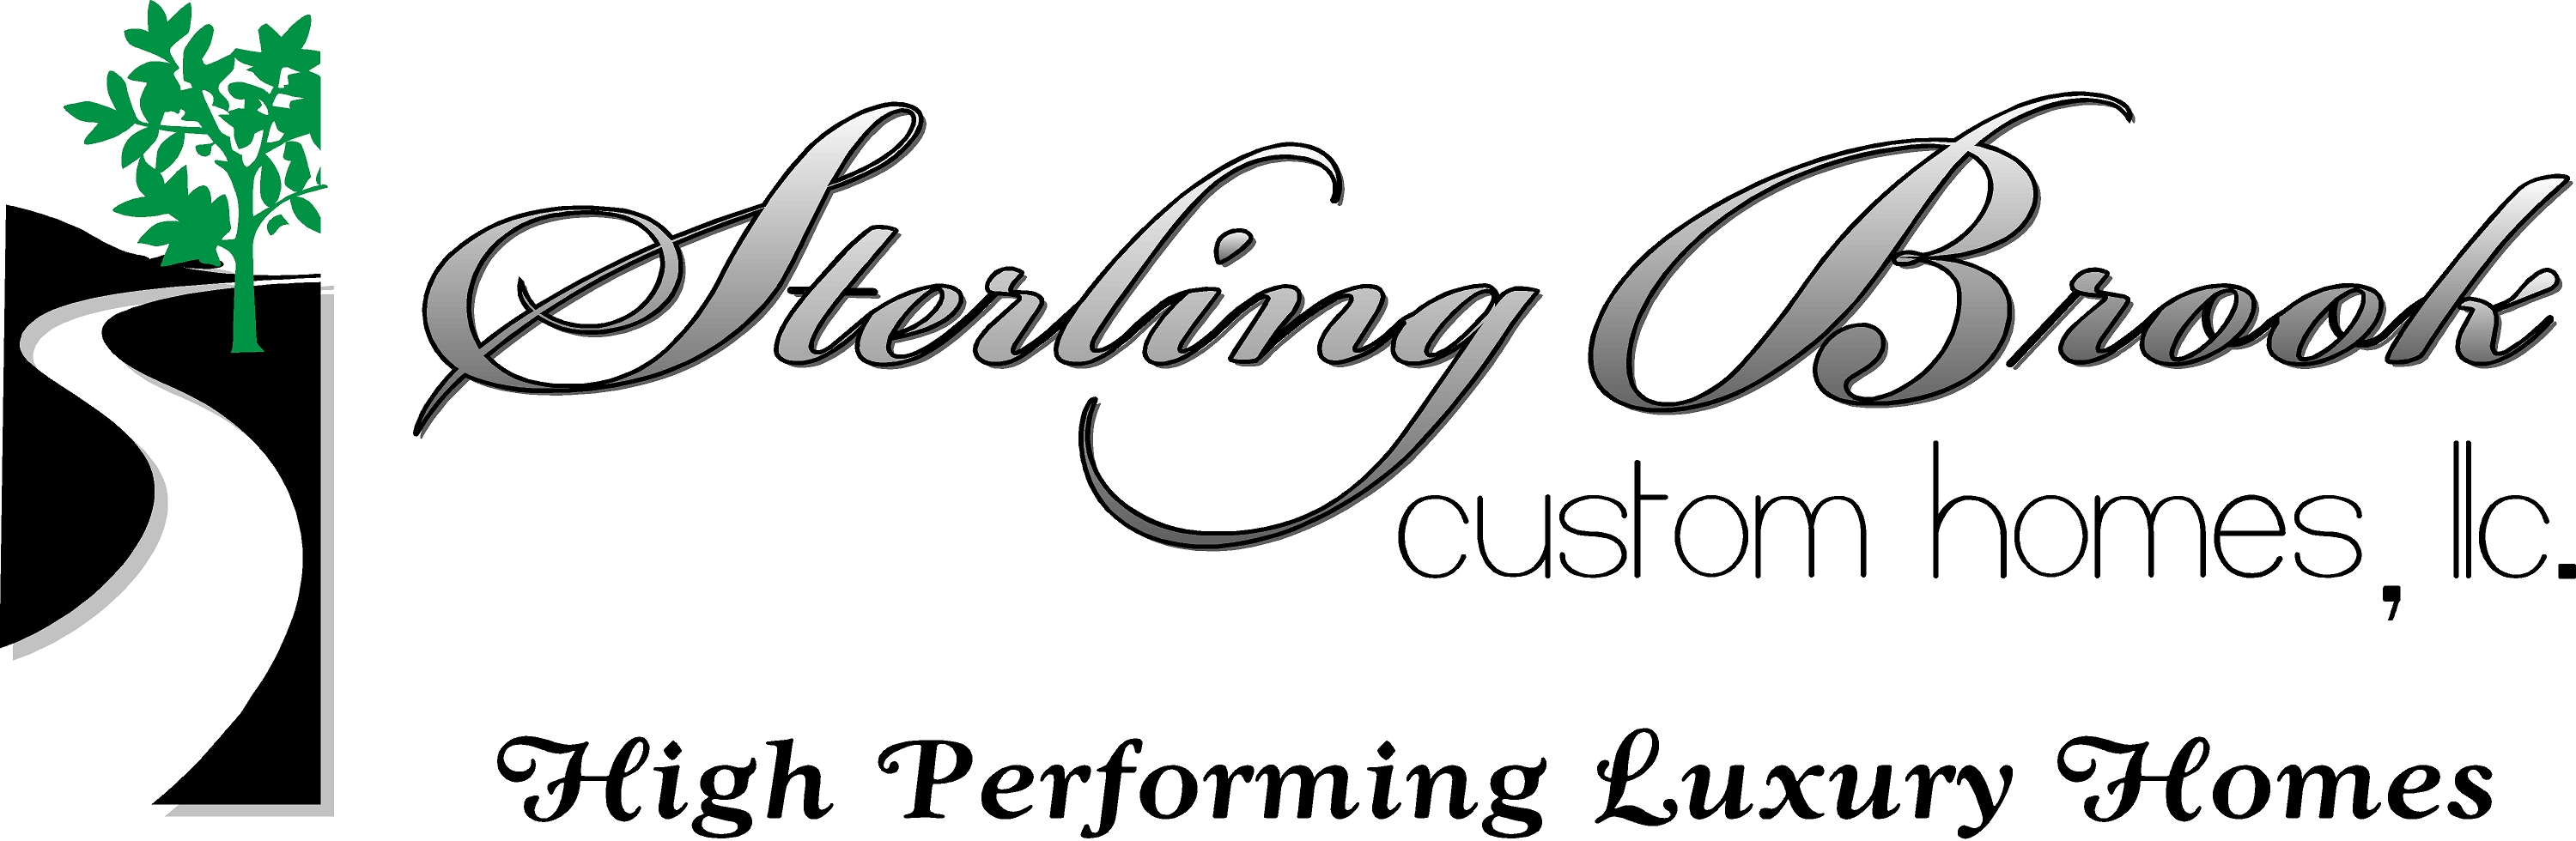 Sterling Brook Custom Homes LLC company logo